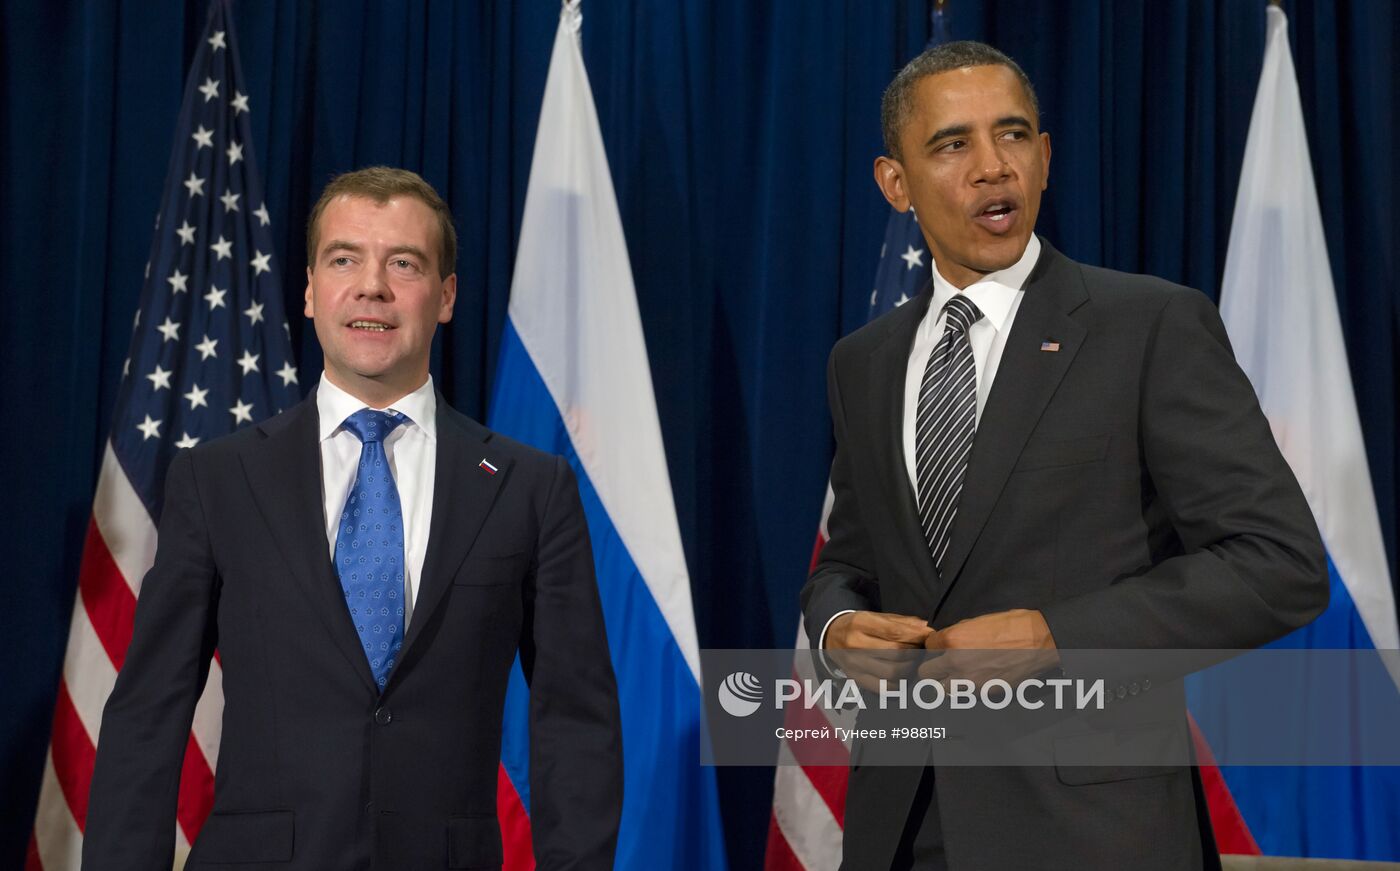 Д.Медведев провел ряд двусторонних встреч в рамках АТЭС